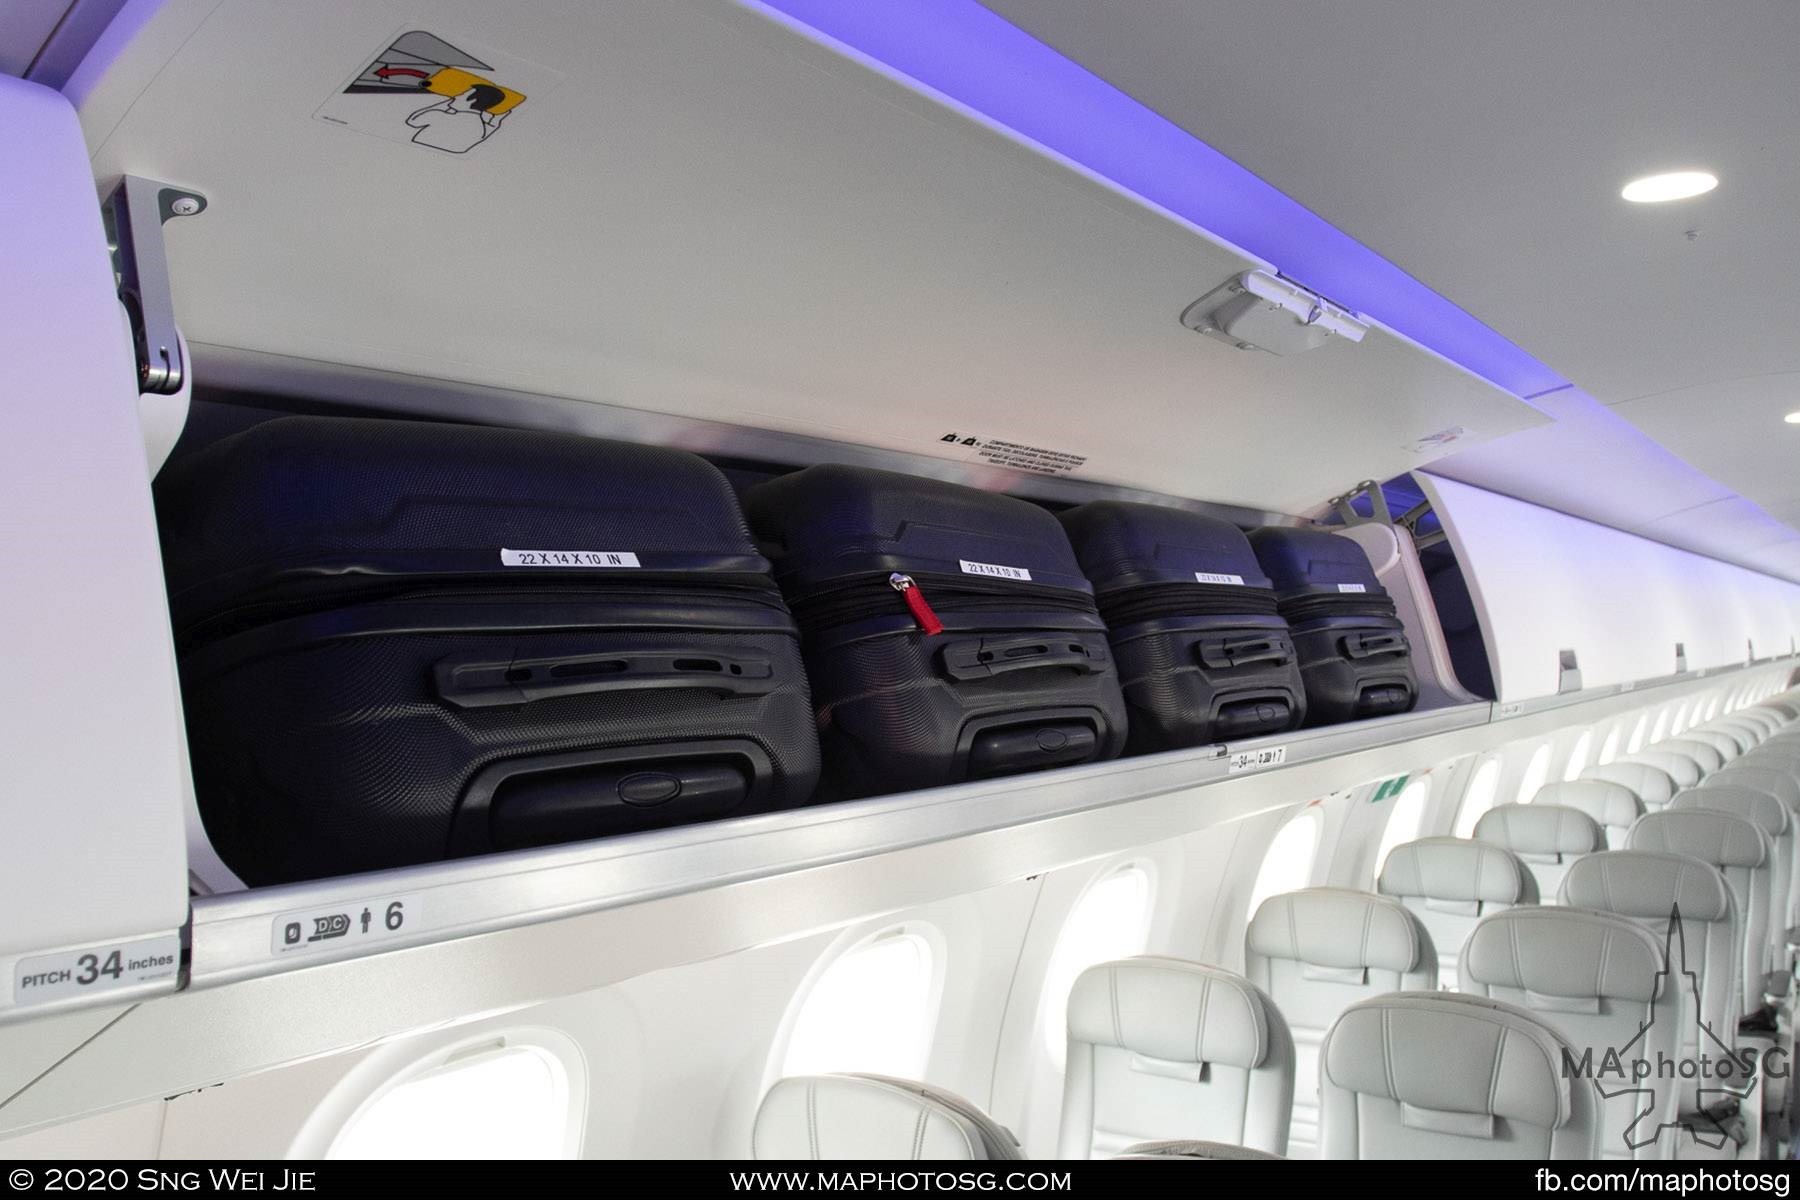 Overhead luggage compartments of the Embraer E195-E2